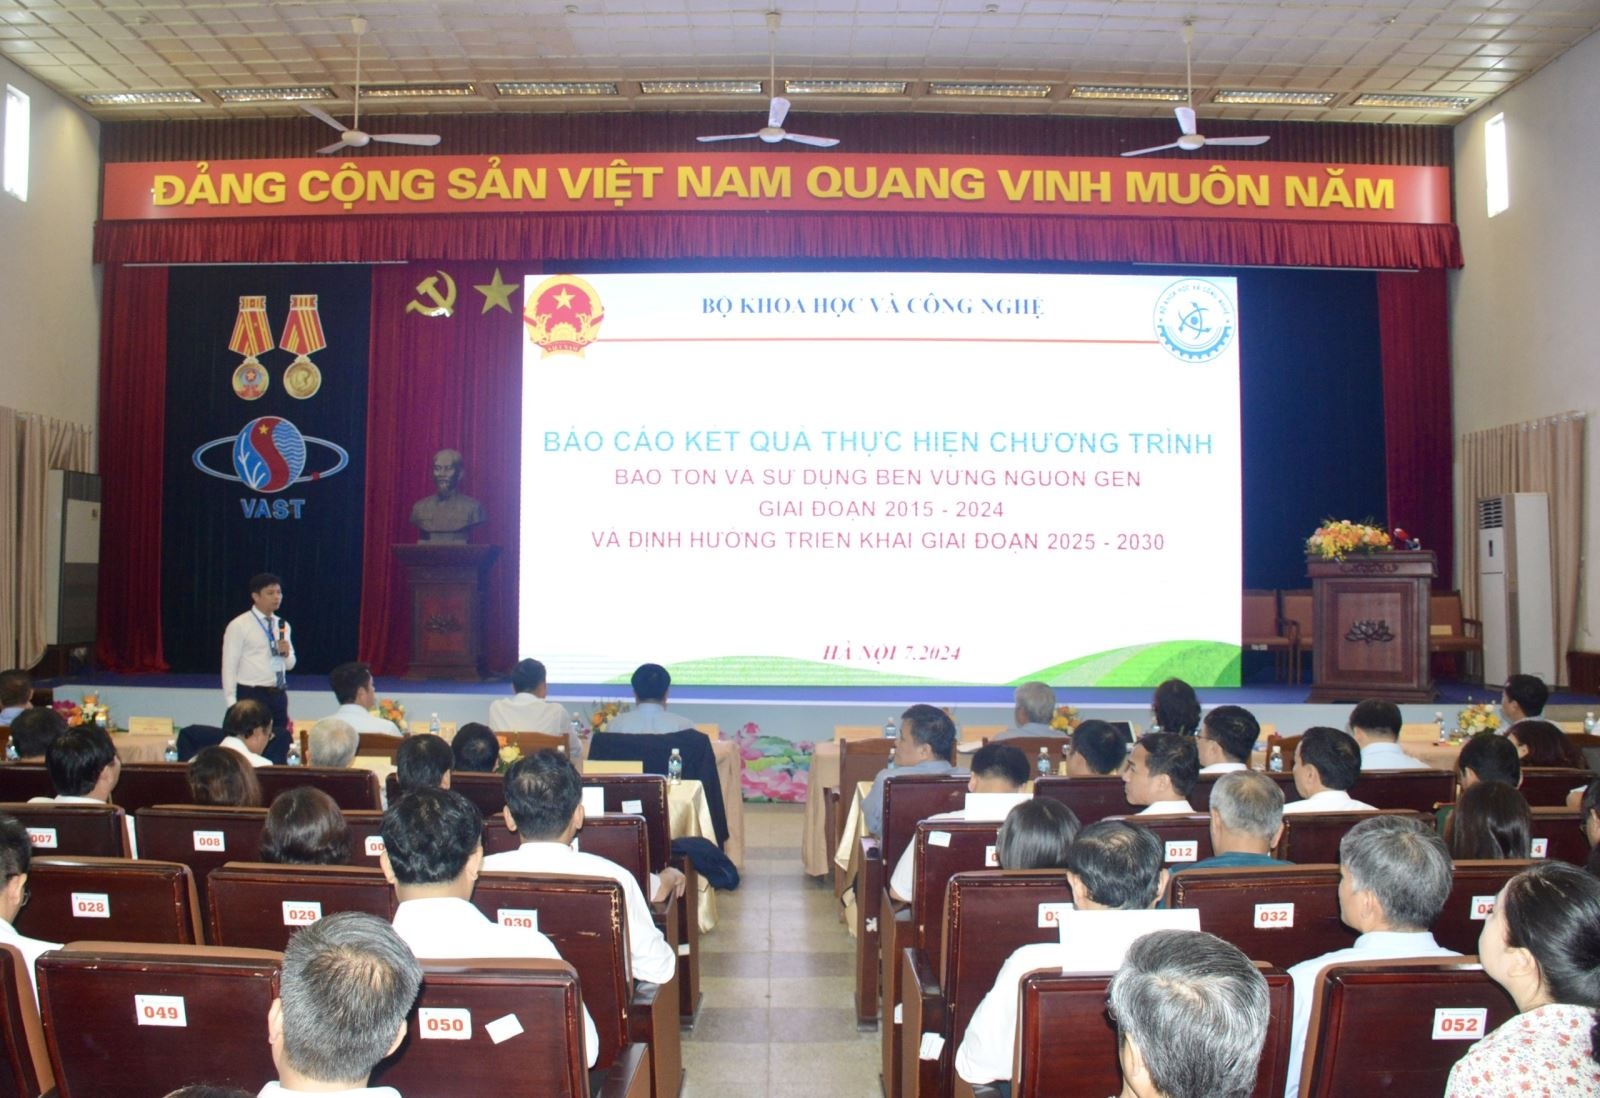 Better policies sustainably develop genetic resources in Vietnam